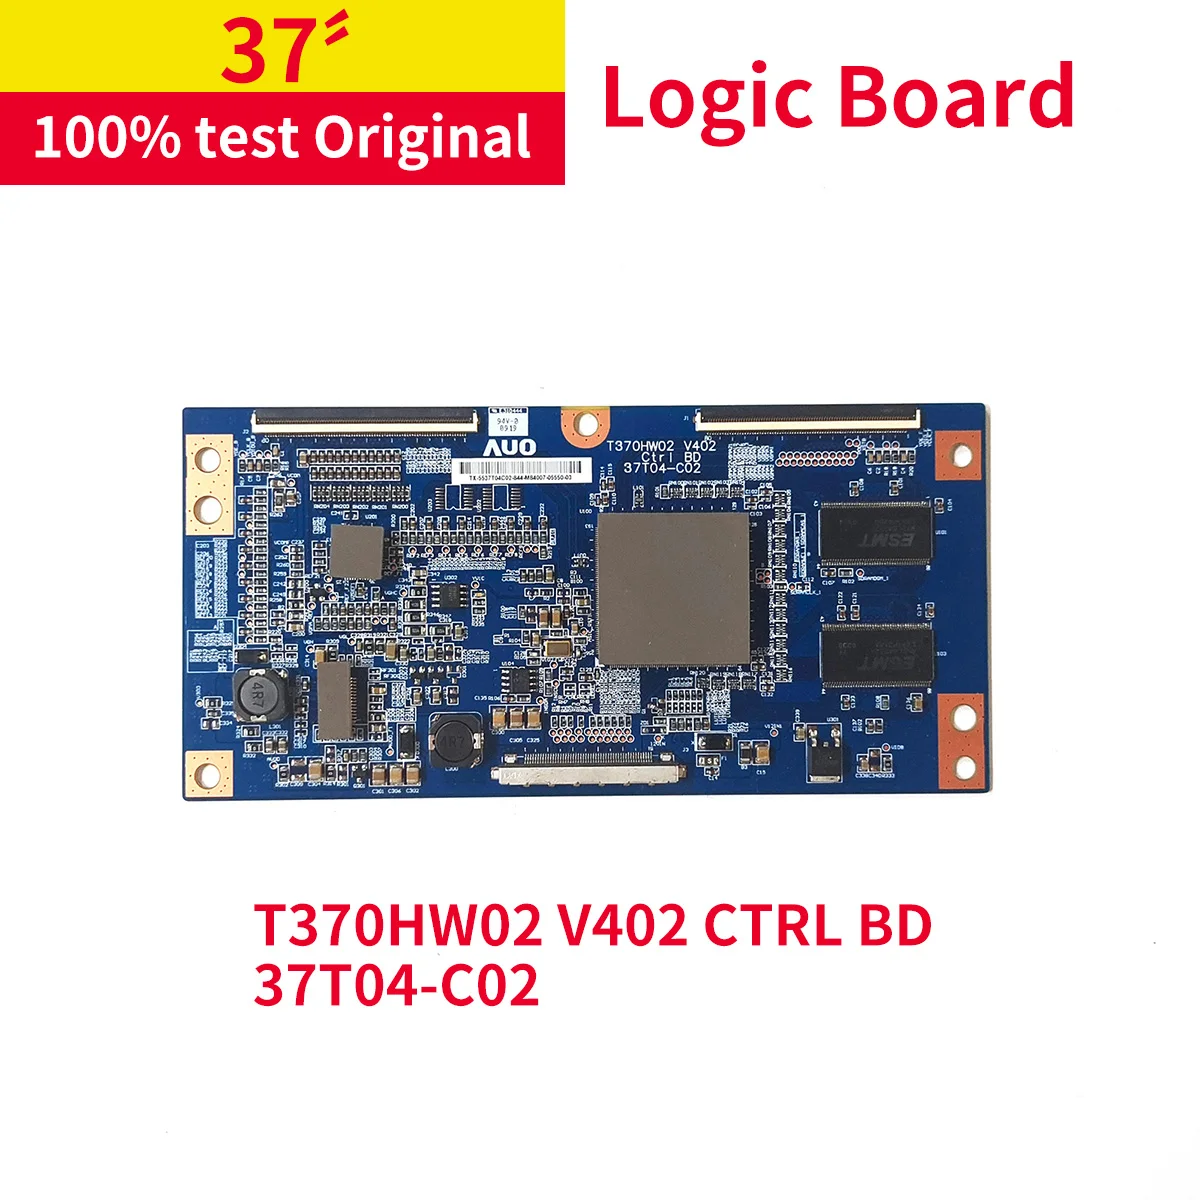 100% Good Quality Original T370HW02 V402 Ctrl BD 37T04-C02 Logic Board T-con BOARD for 37 Inch LED LCD TV